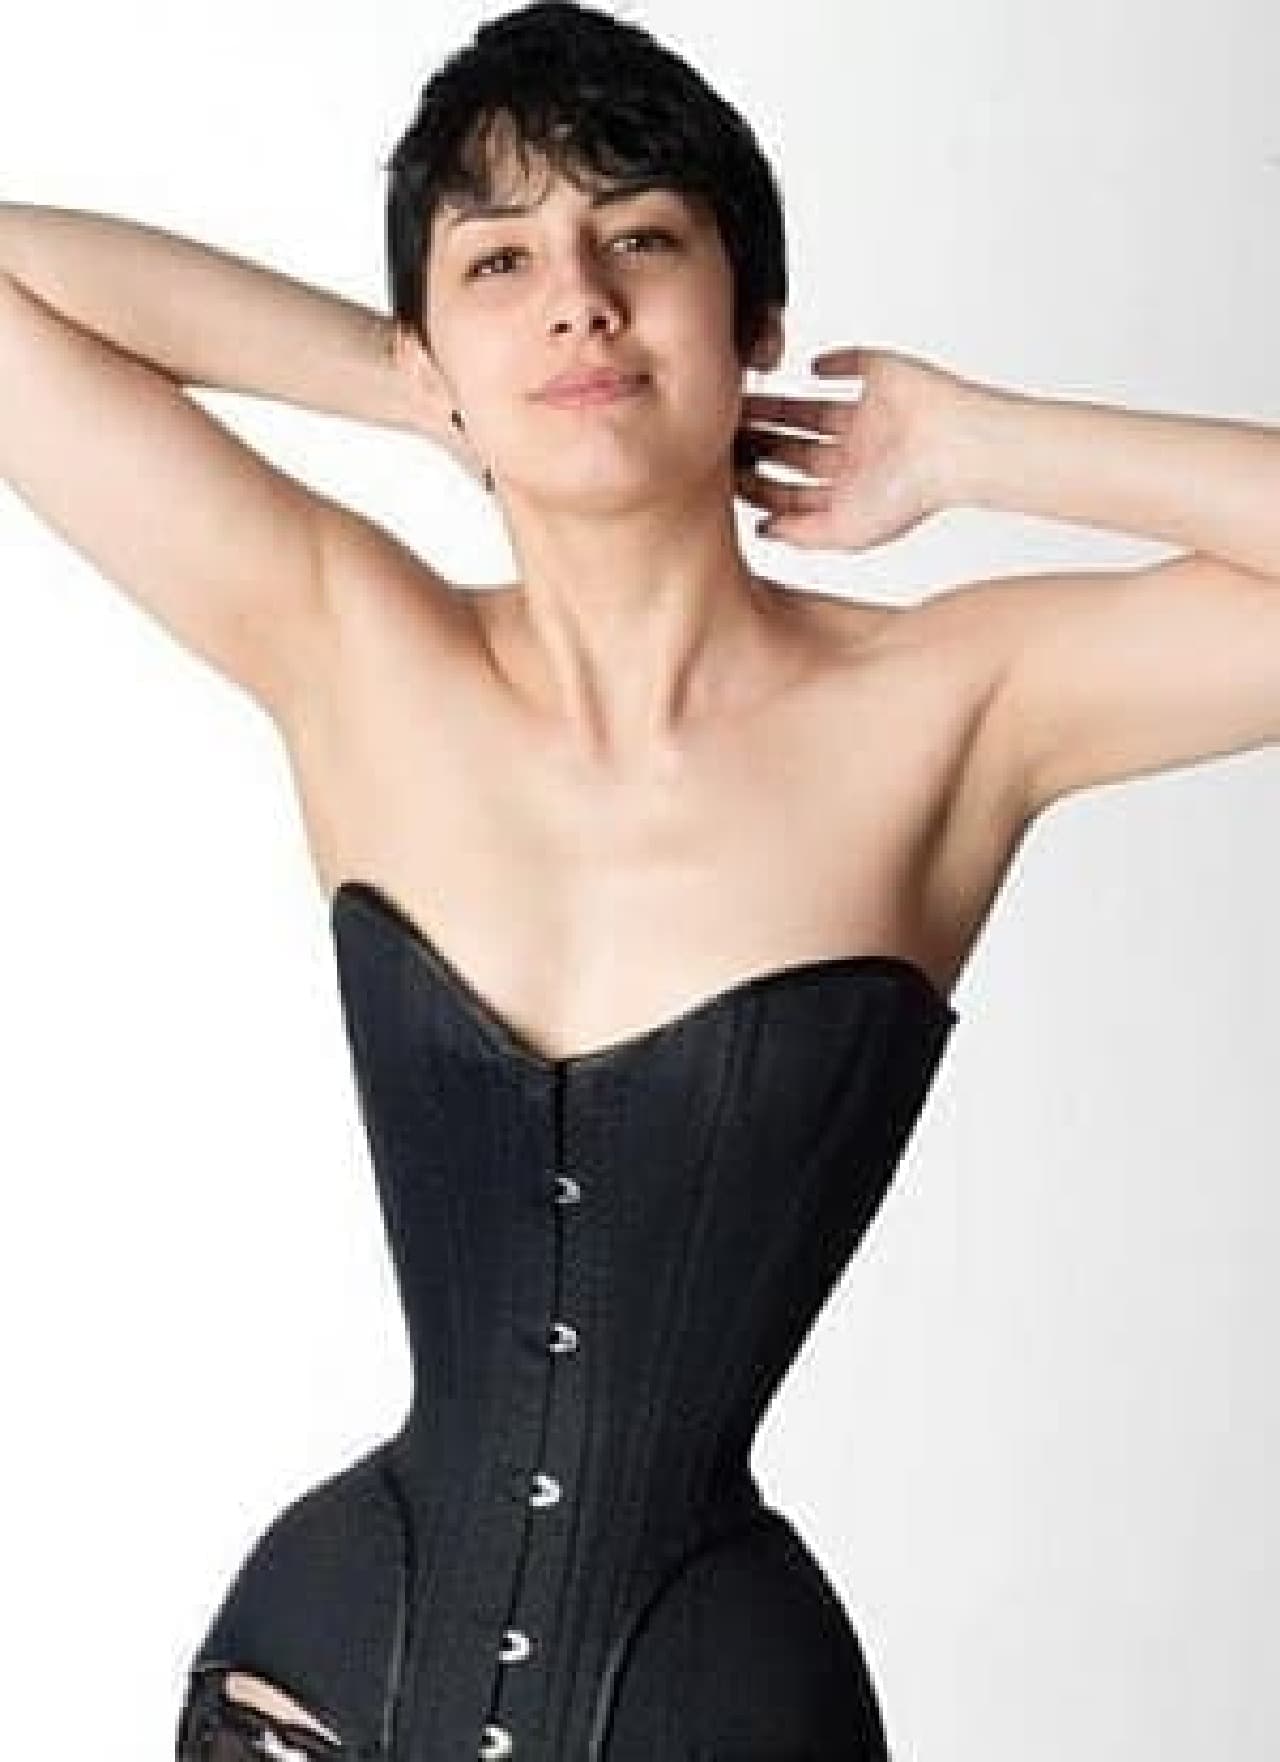 Michele Koebke wears a corset all day long.